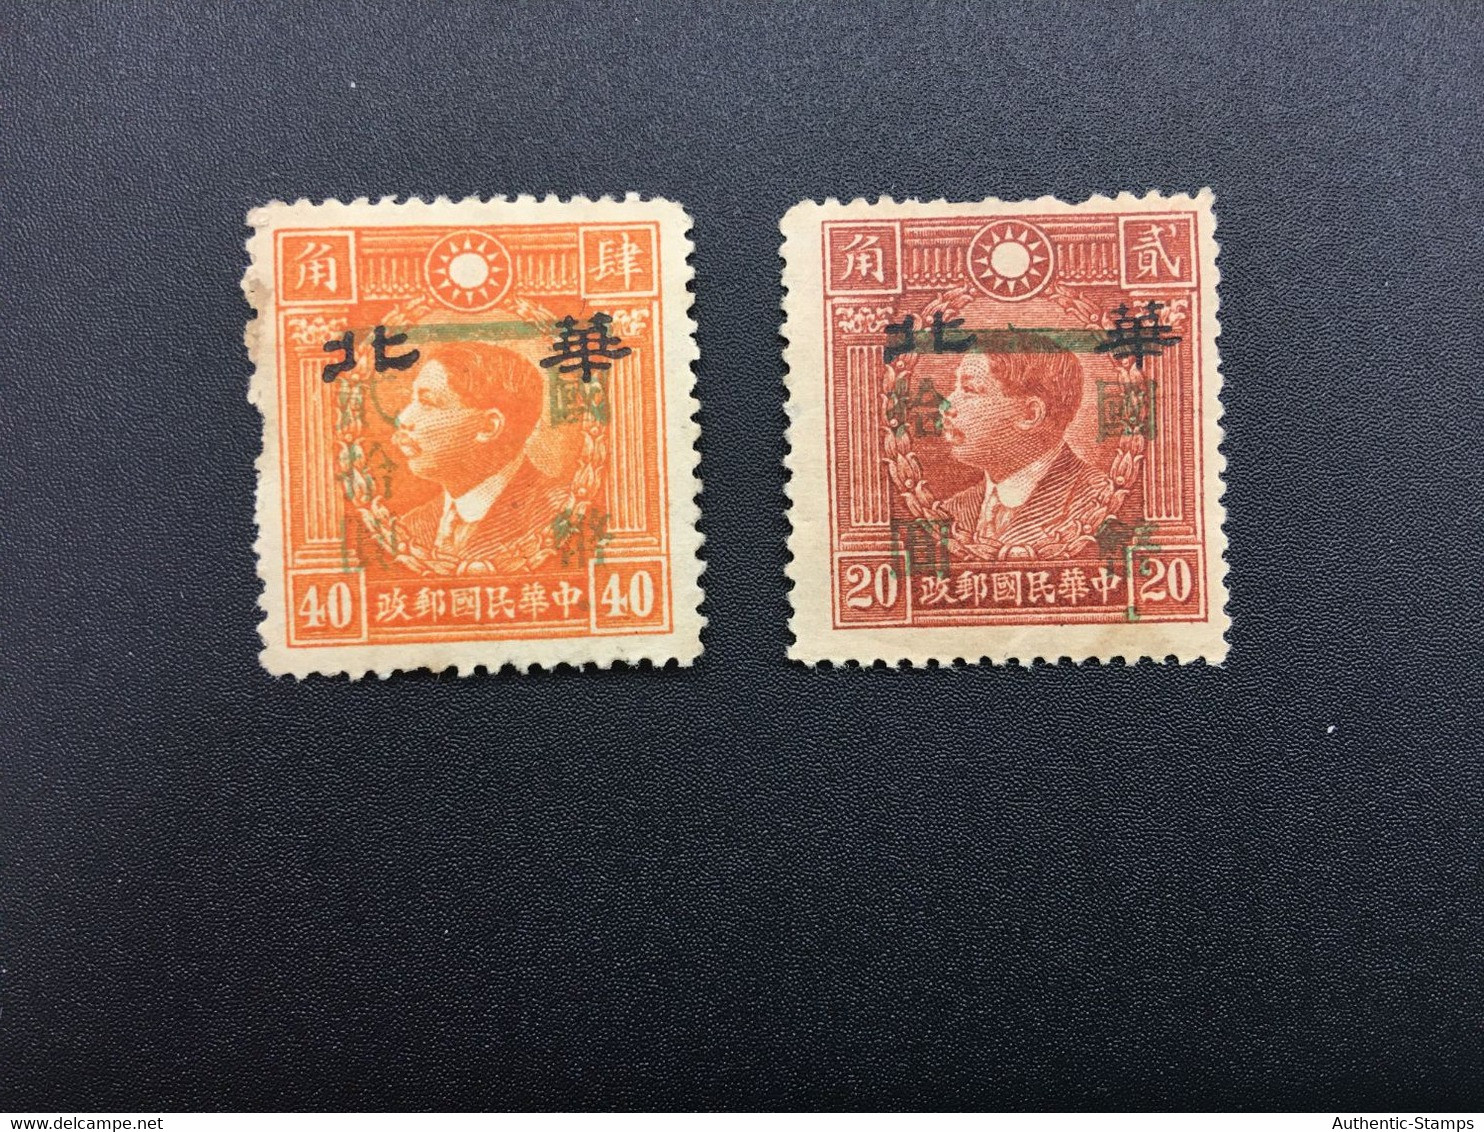 CHINA STAMP, Set, Rare Overprint, UnUSED, TIMBRO, STEMPEL, CINA, CHINE, LIST 6531 - 1941-45 Northern China